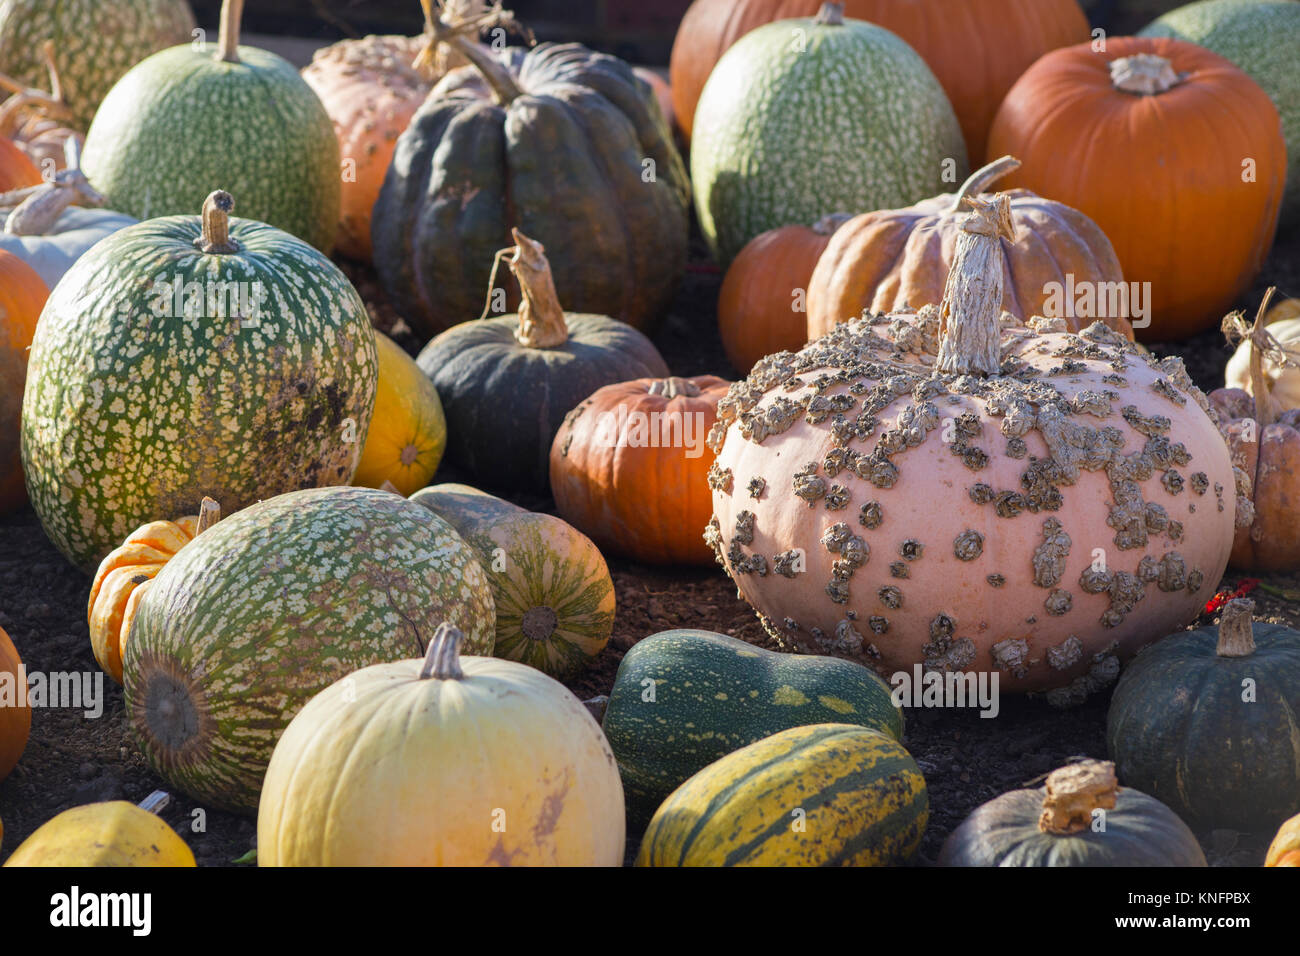 A collection of harvested pumpkins including Cucurbita maxima 'Galeux d'Eysines' and Cucurbita ficifolia Stock Photo